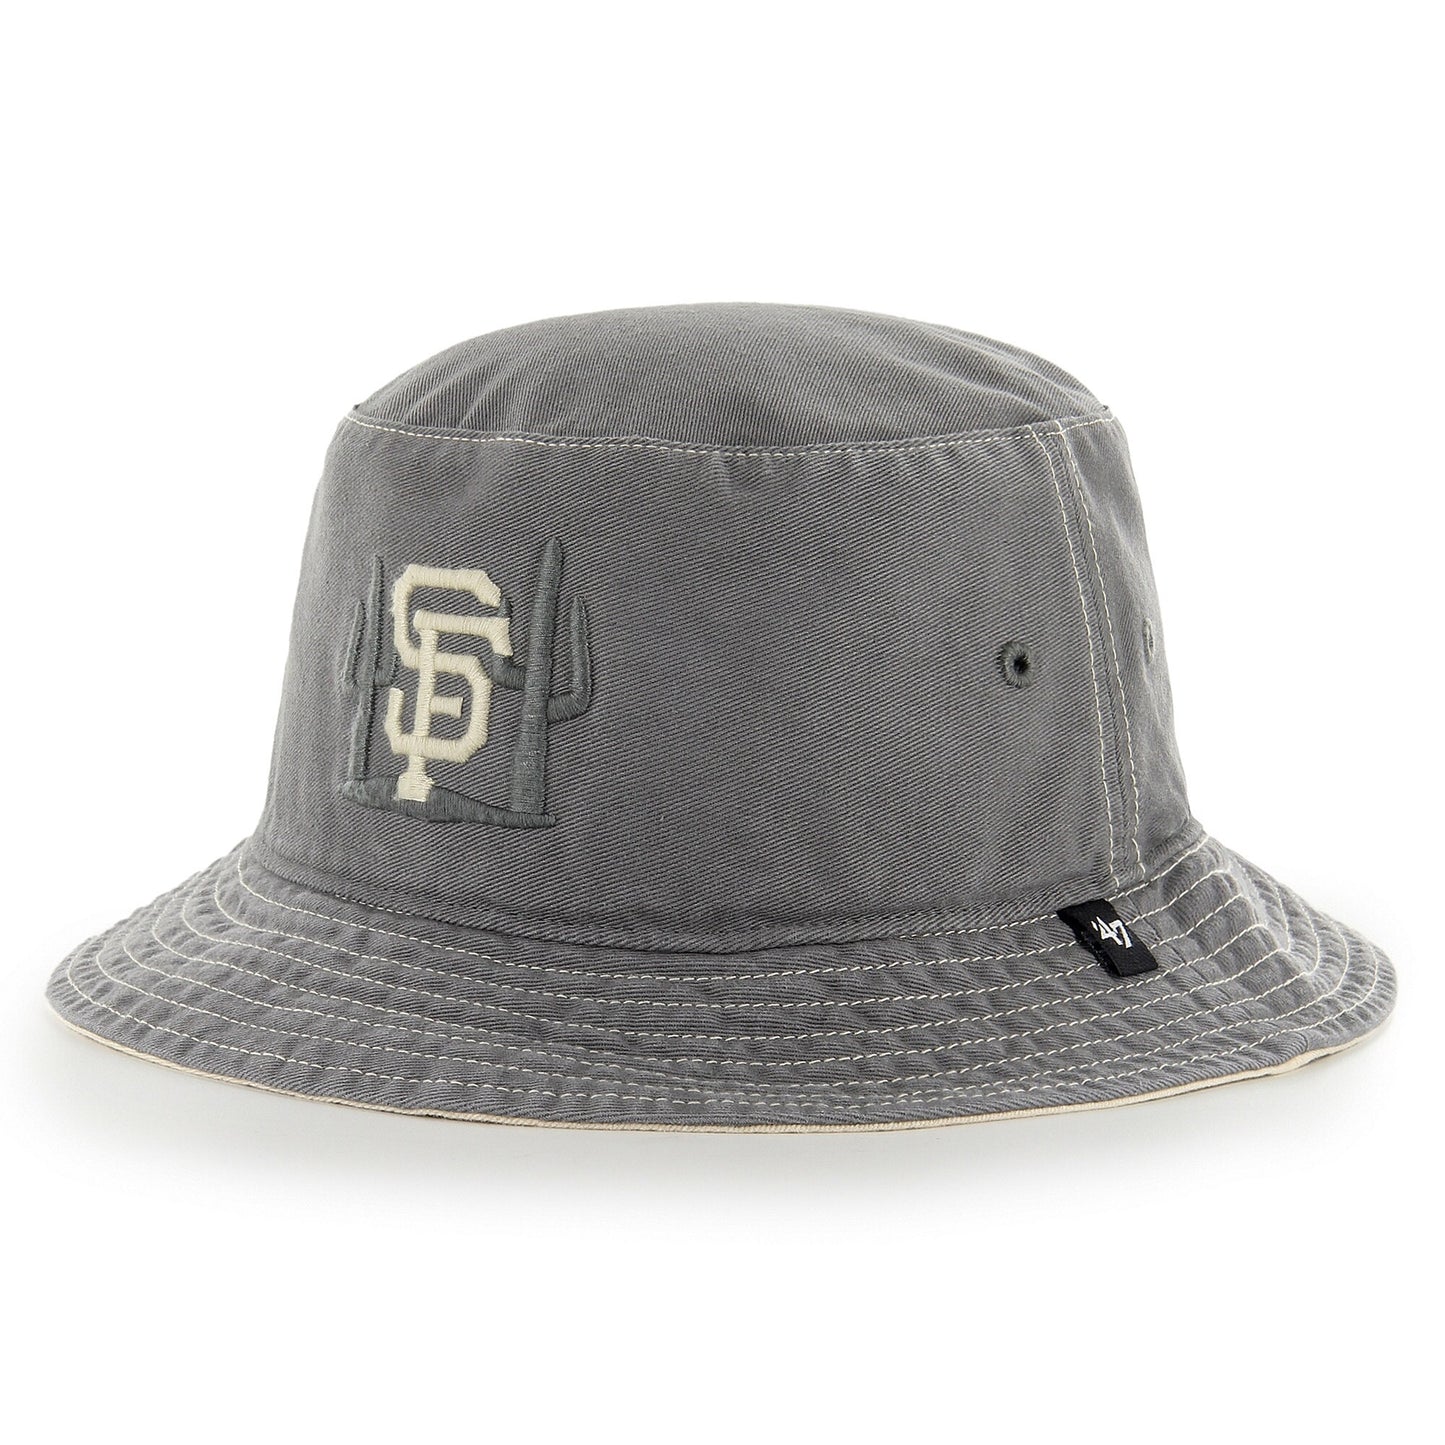 San Francisco Giants '47 Trailhead Bucket Hat - Charcoal